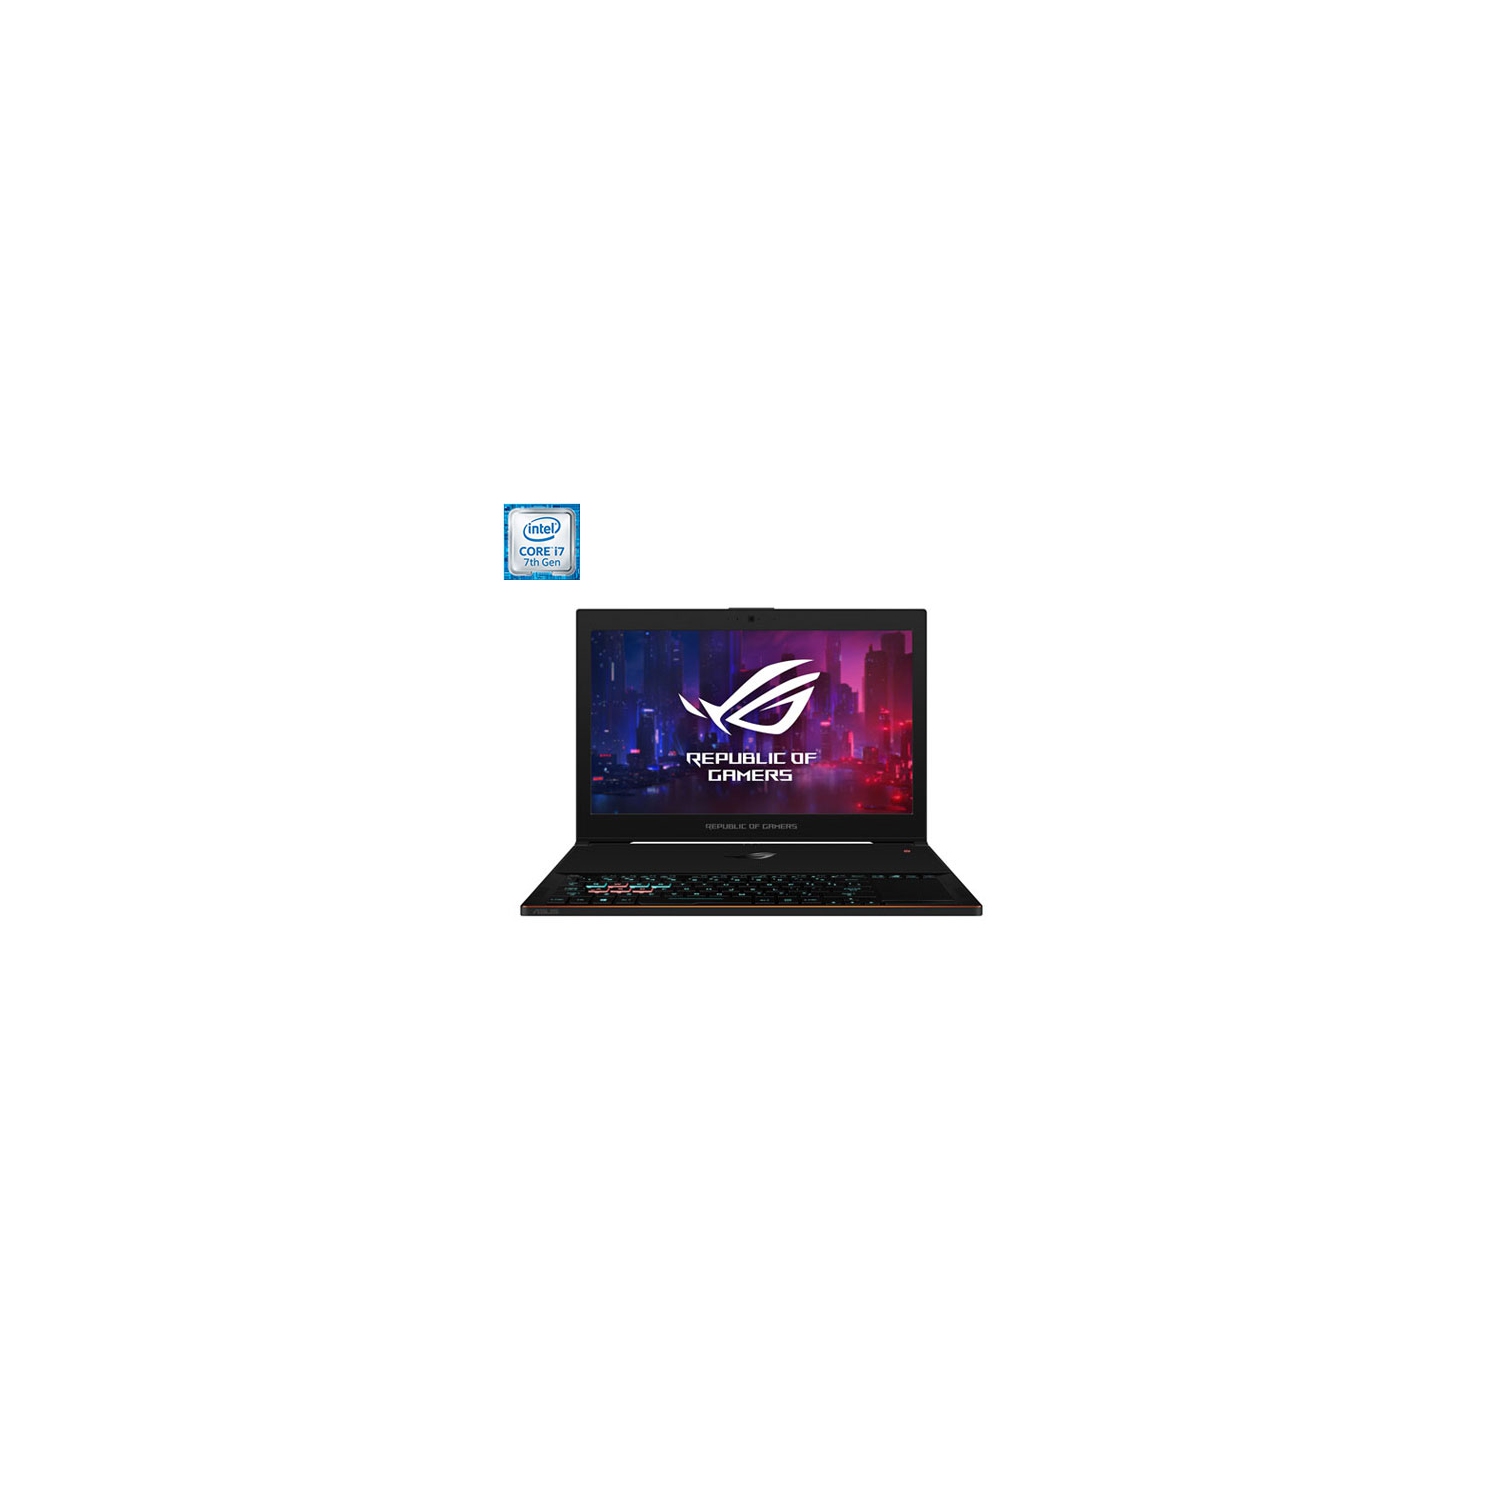 Refurbished (Fair) - ASUS ROG Zephyrus GX501 15.6" Gaming Laptop (Intel Core i7-7700HQ/512GB SSD/16GB RAM/Win10)